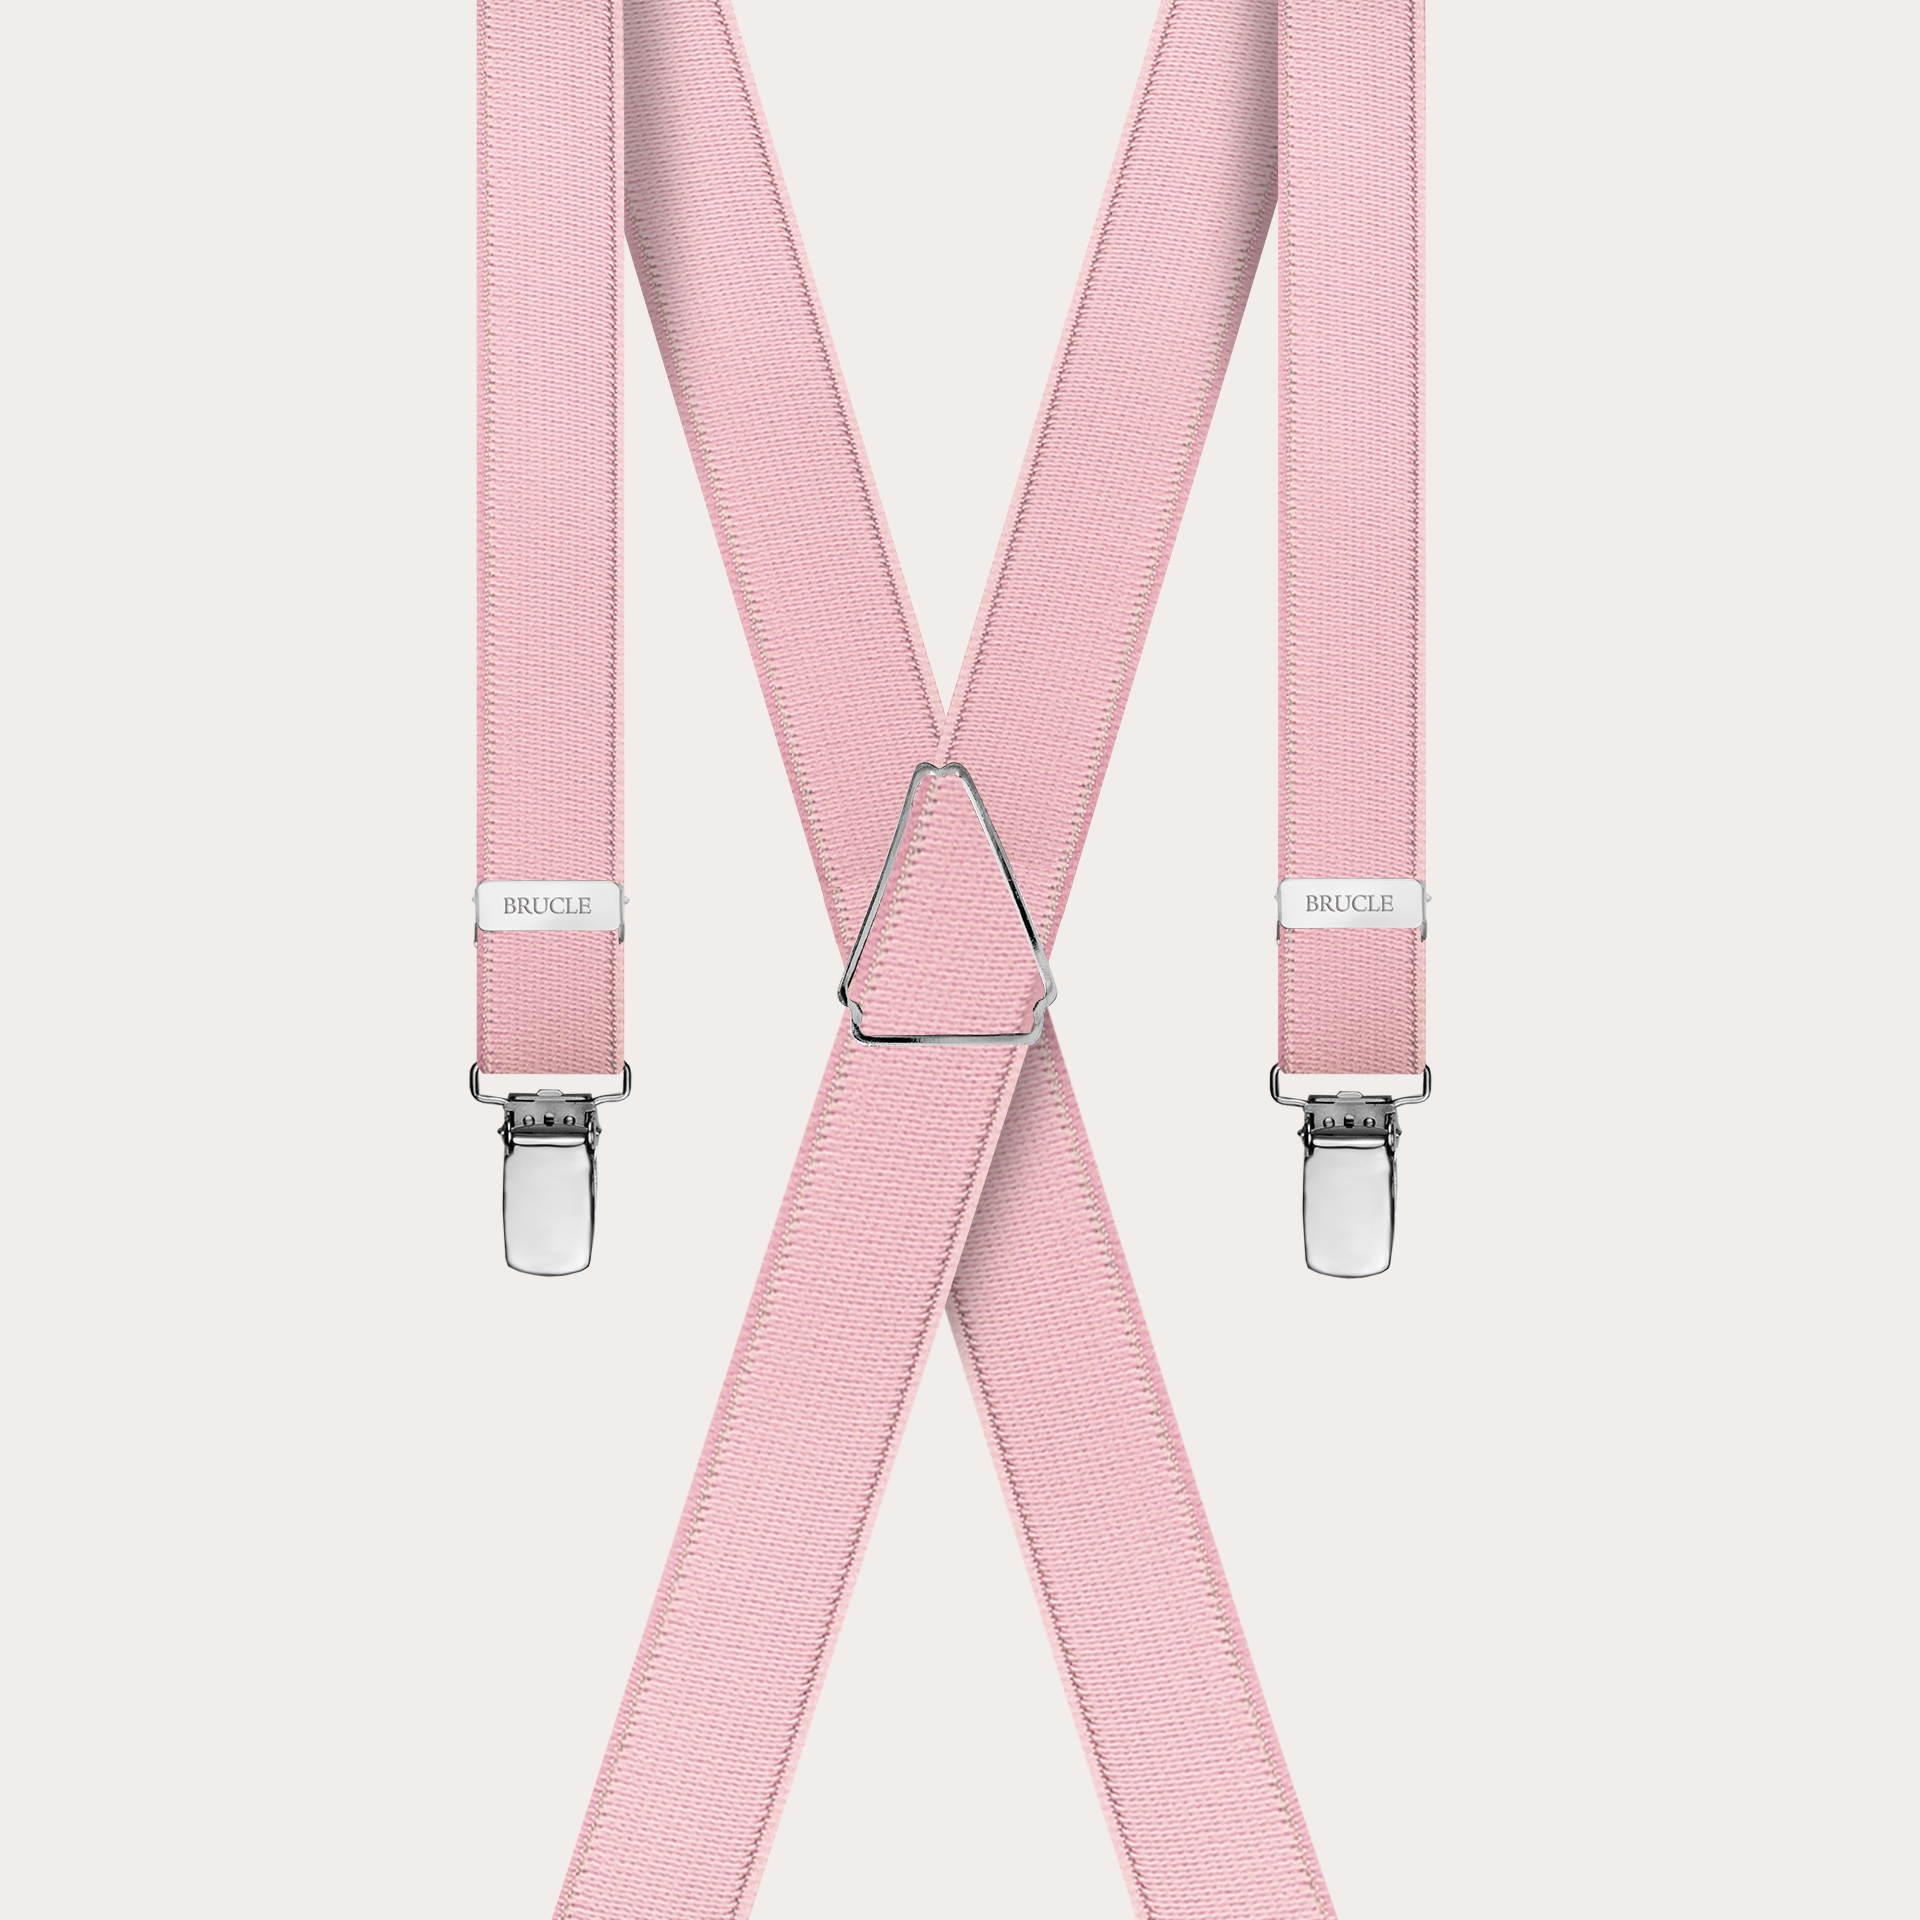 Bretelles extra-fines rose avec 4 clips